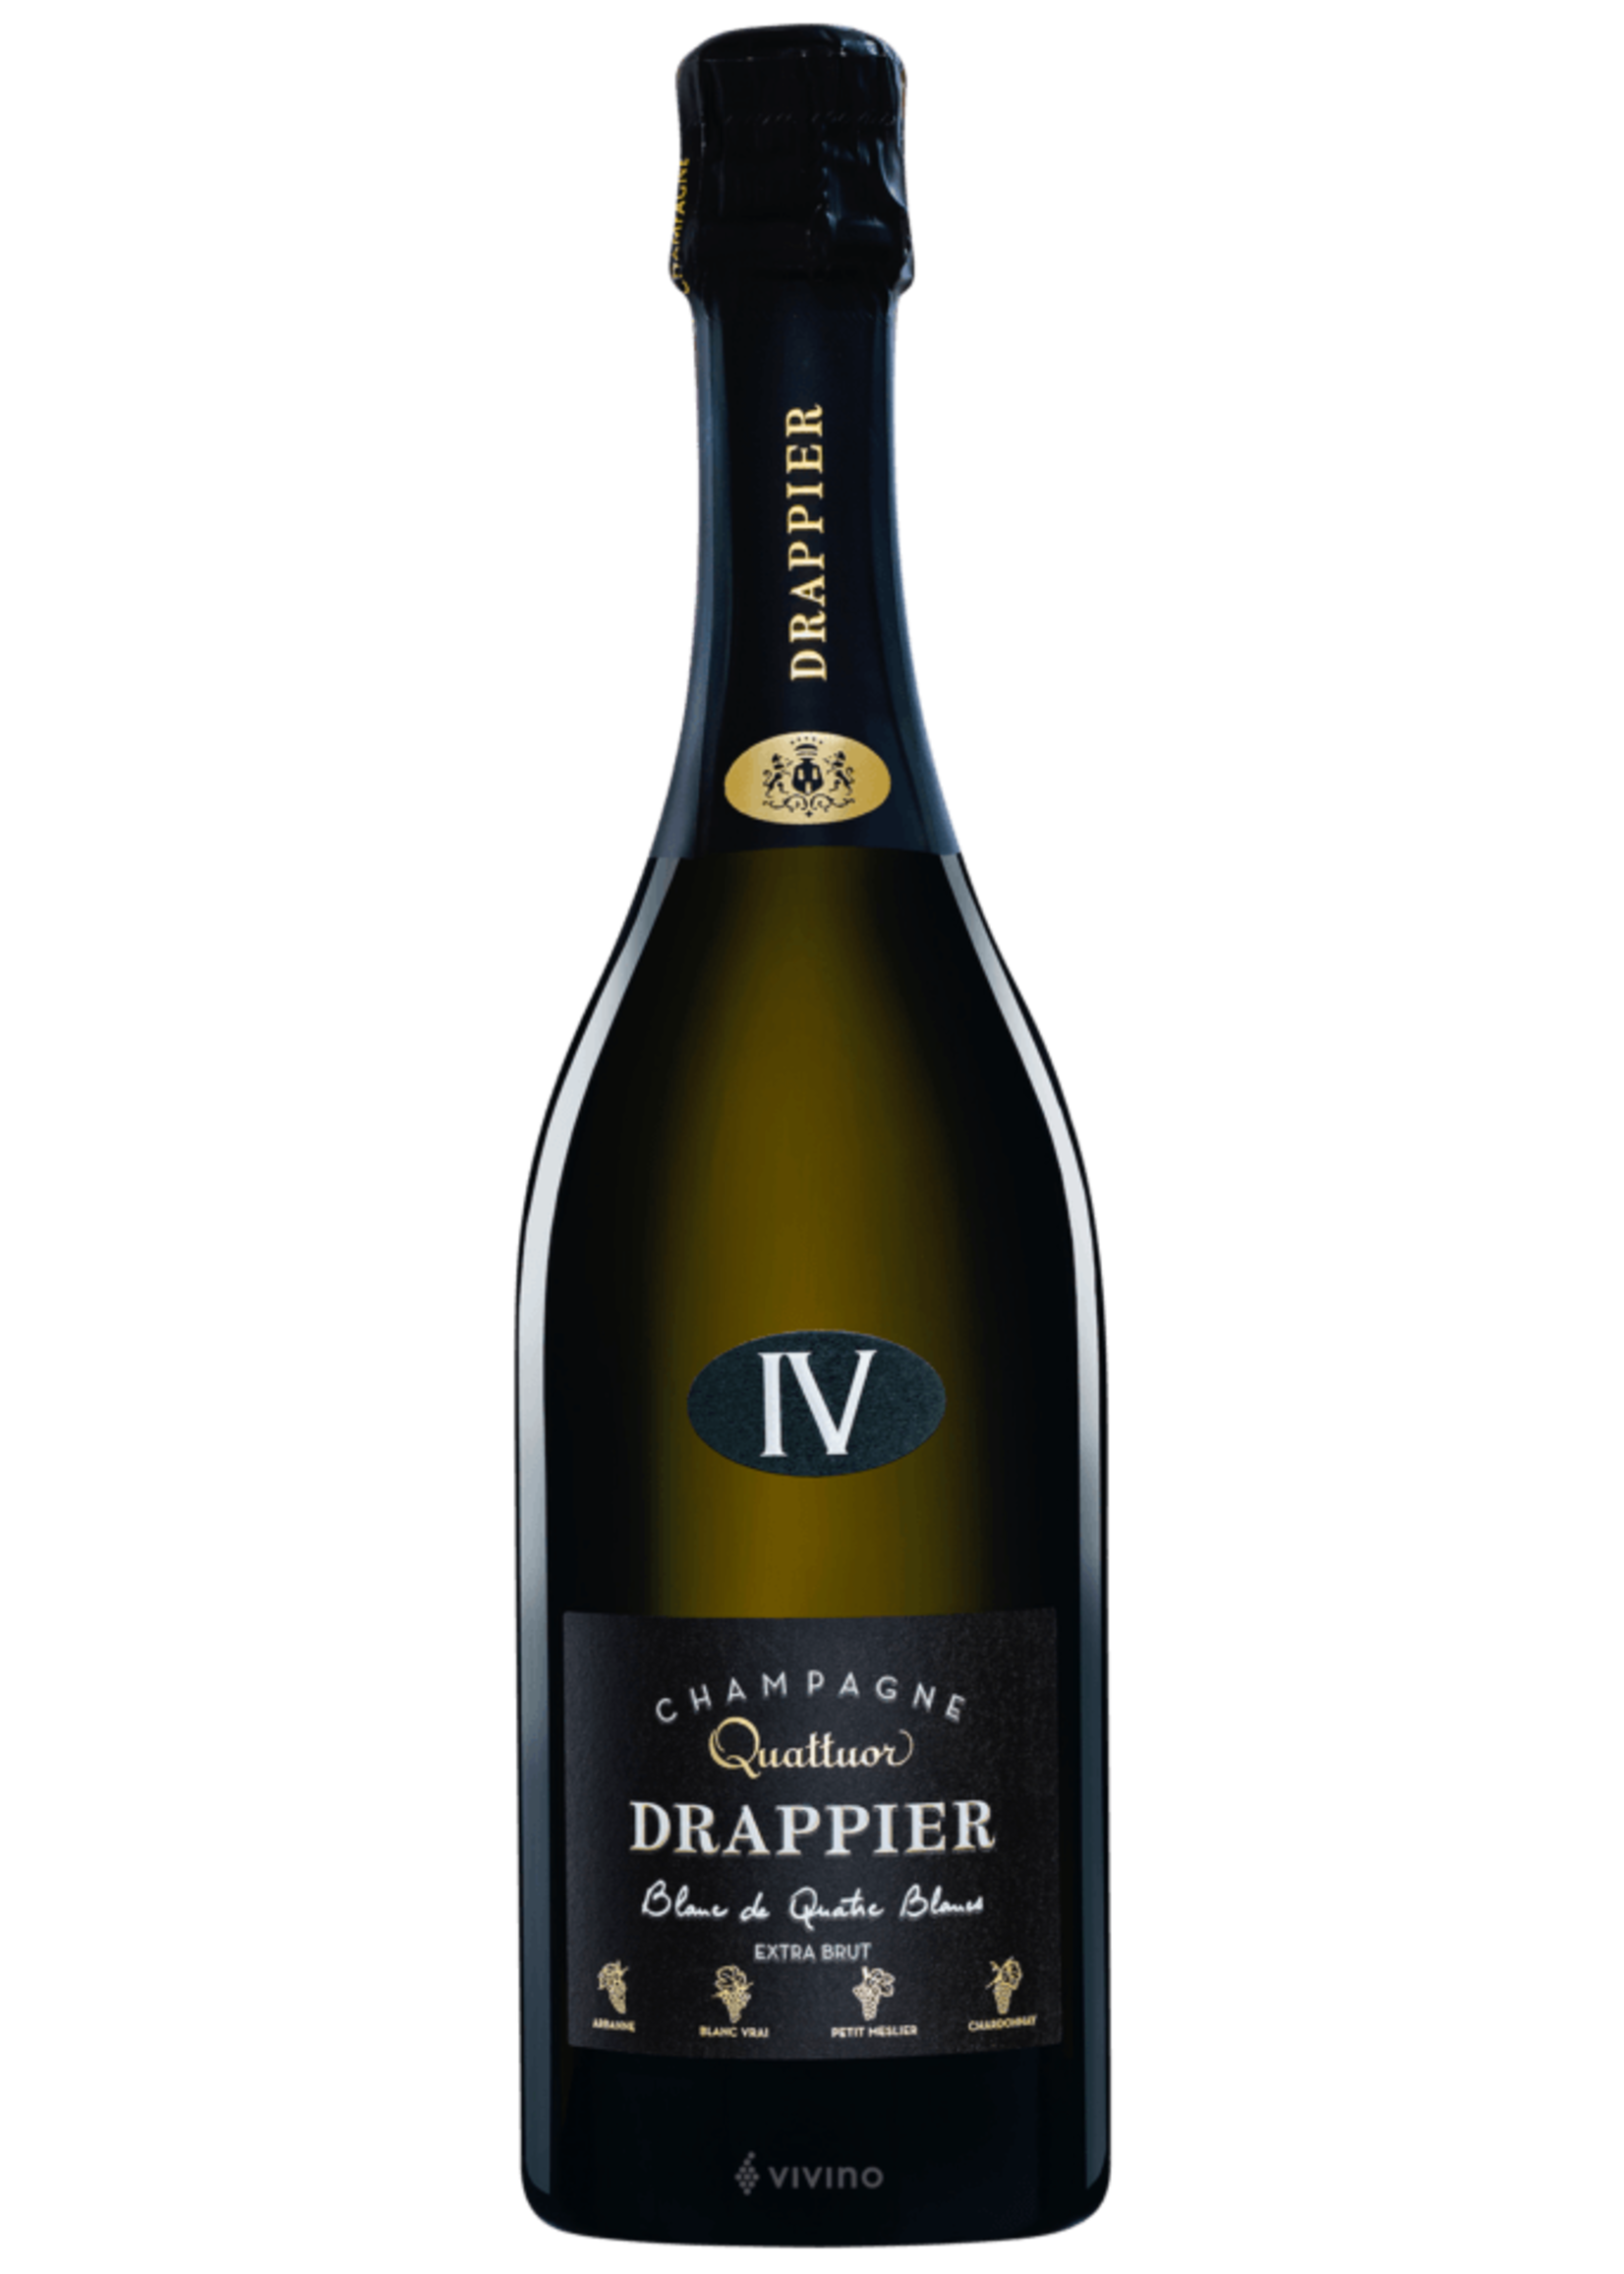 Champagne Drappier Champagne Drappier / Quattuor IV Blanc de Quatre Blancs / 750 mL